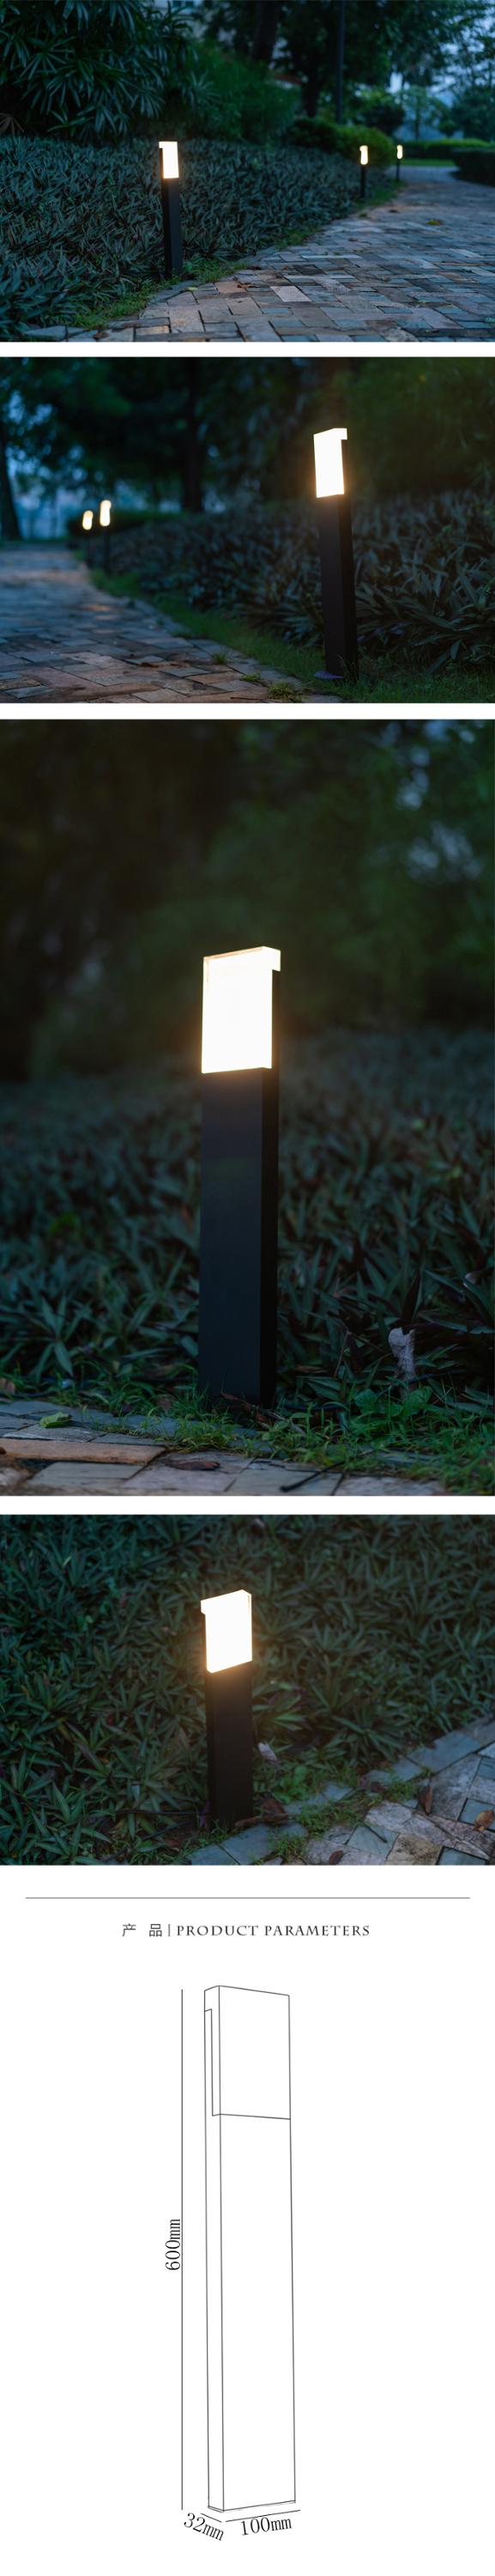 La trayectoria al aire libre del jardín del milight de la prenda impermeable LED del aluminio del diseño simple 2019 se enciende